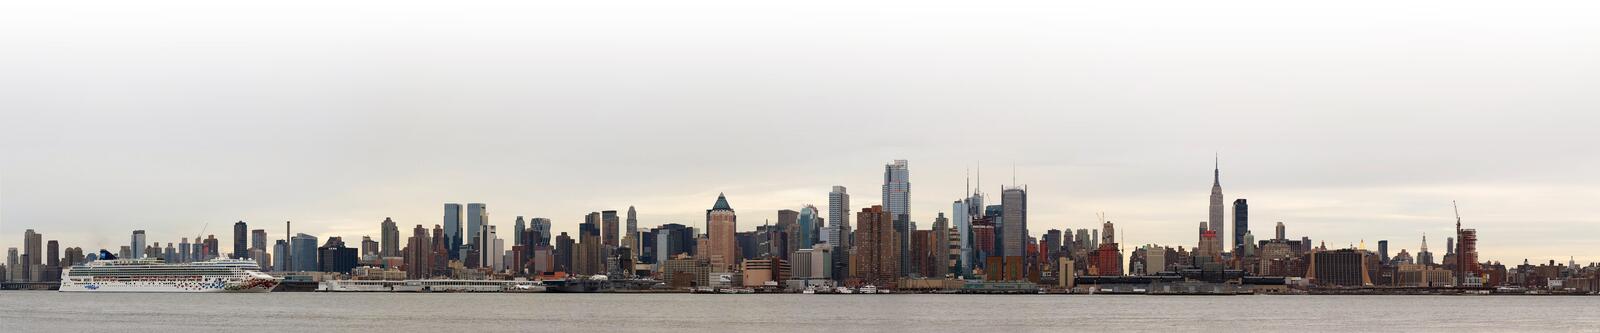 Wallpapers new york city city landscape metropolis on the desktop